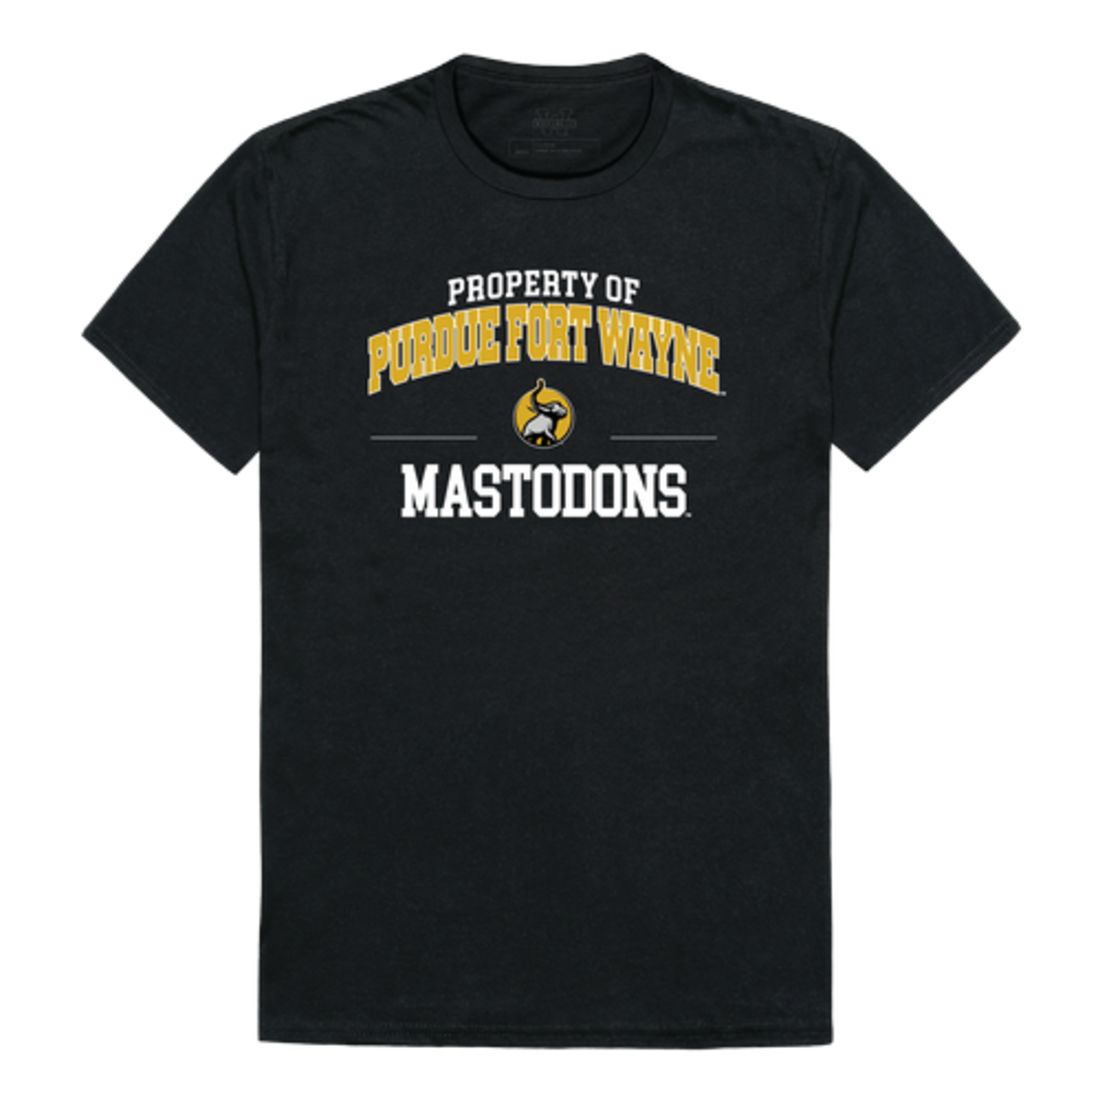 Purdue University Fort Wayne Mastodons Property T-Shirt Tee